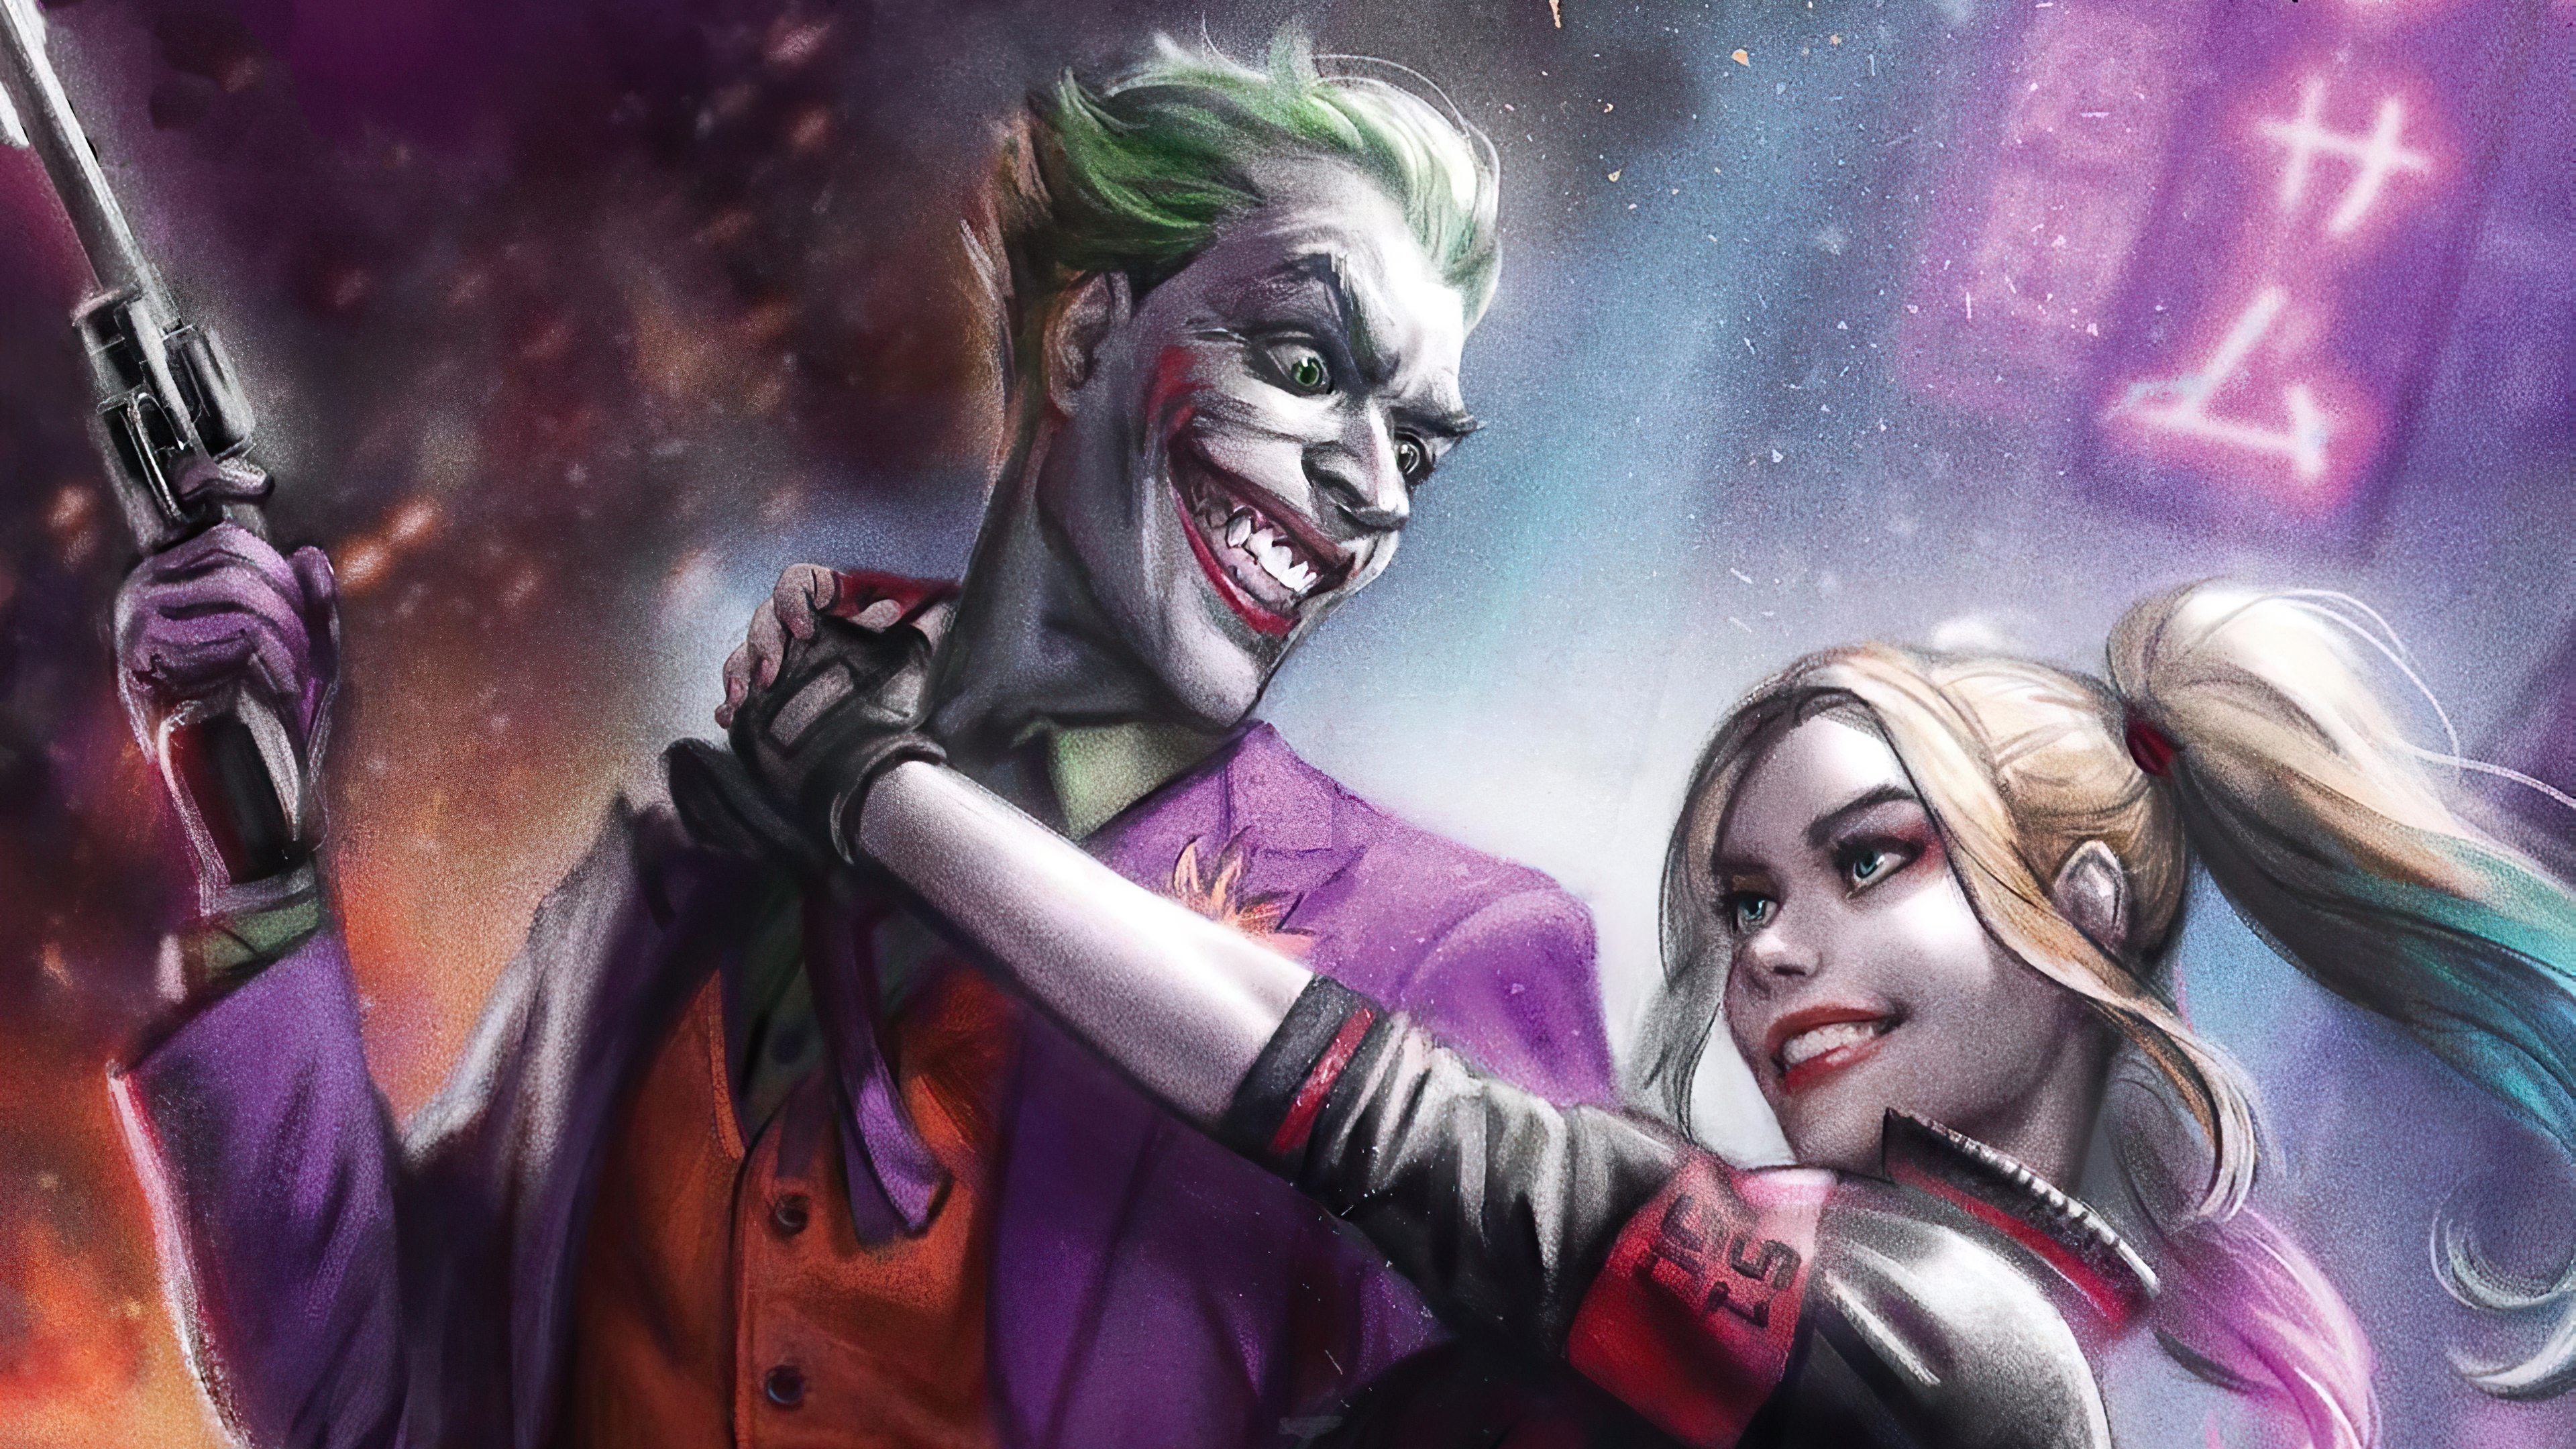 Joker And Harley Quinn 4k 2020, HD Superheroes, 4k Wallpapers, Images